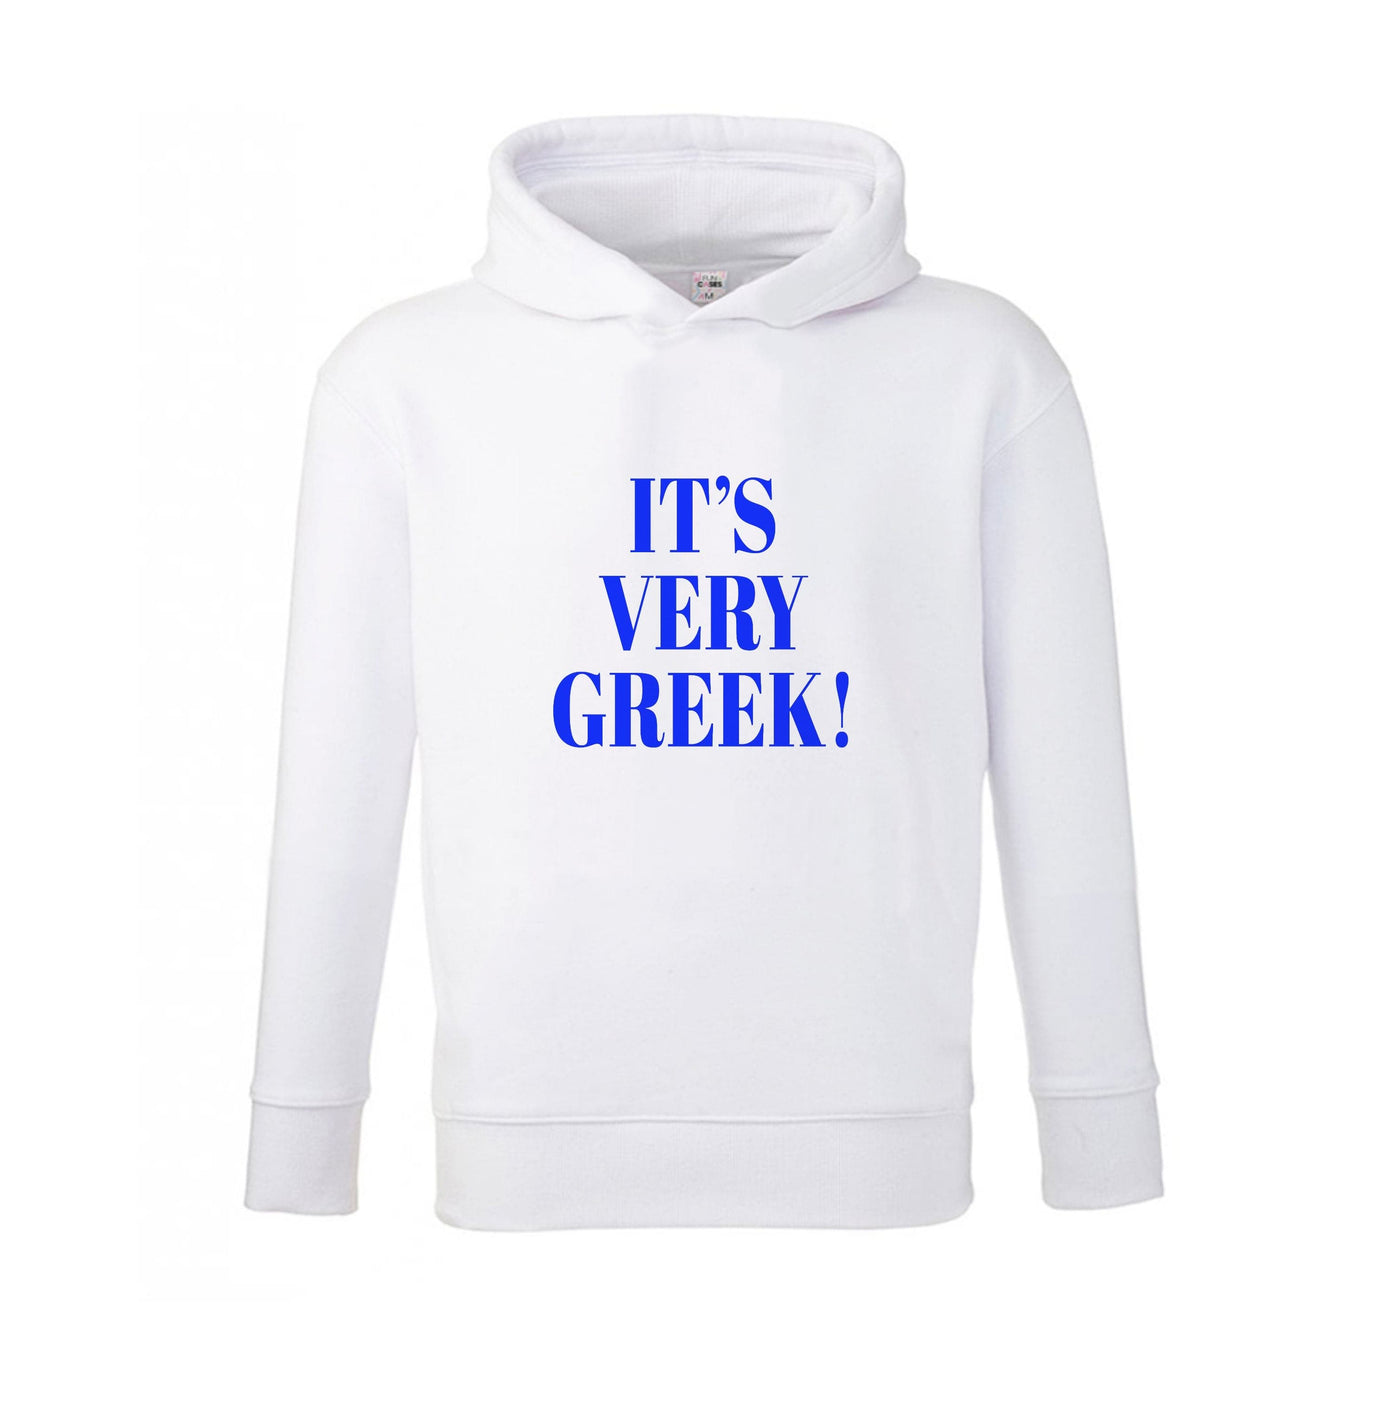 It's Very Greek! - Mamma Mia Kids Hoodie